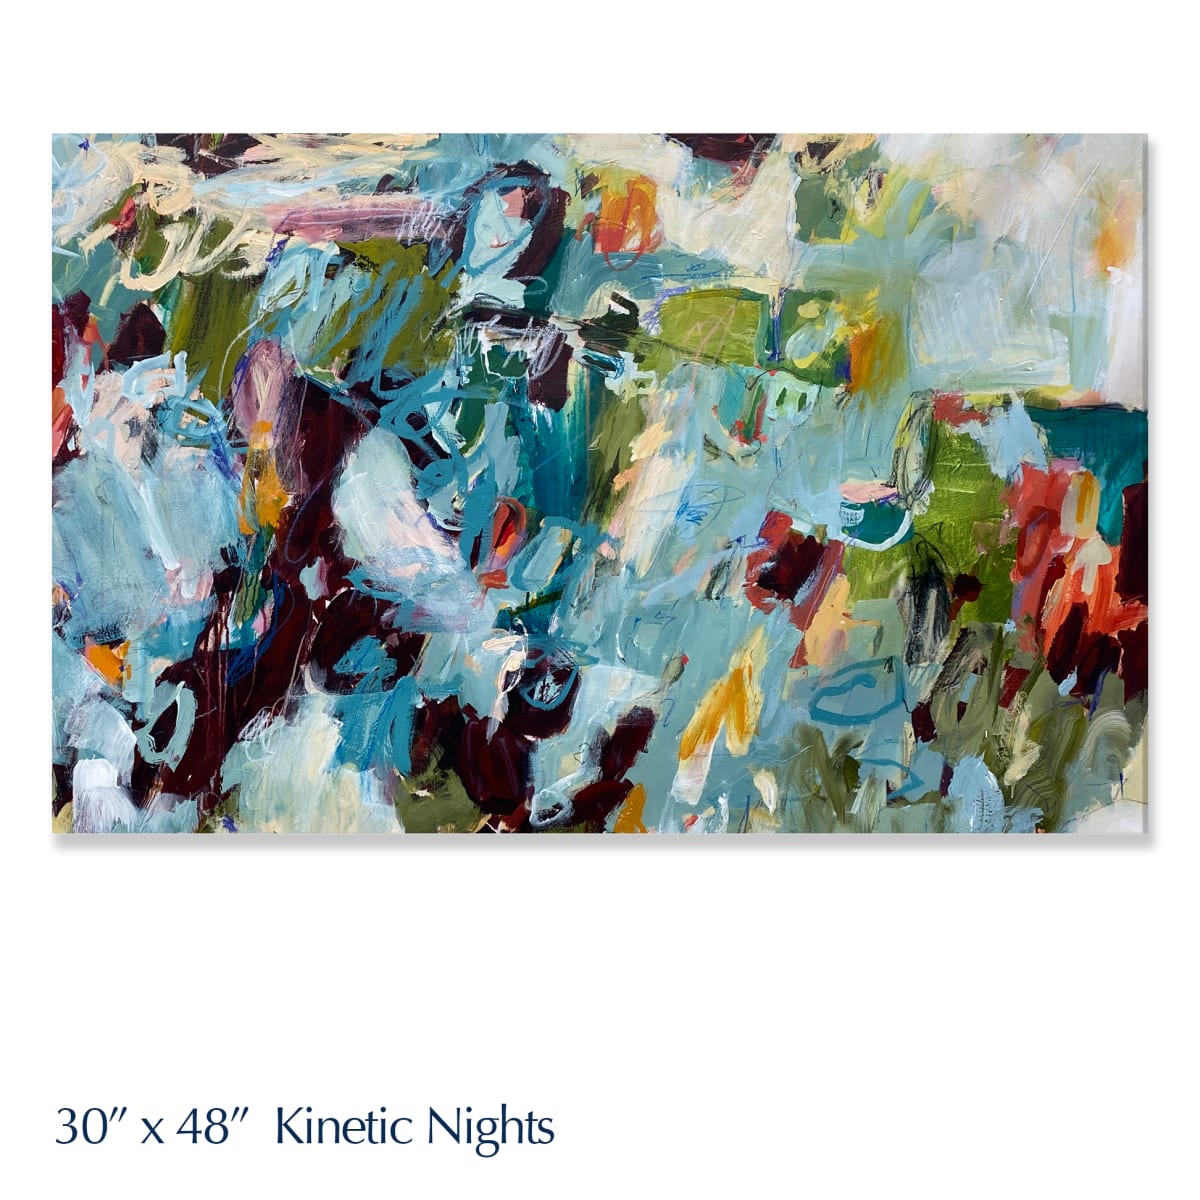 Kinetic Nights by Jane Burton  Image: 31 x 50"